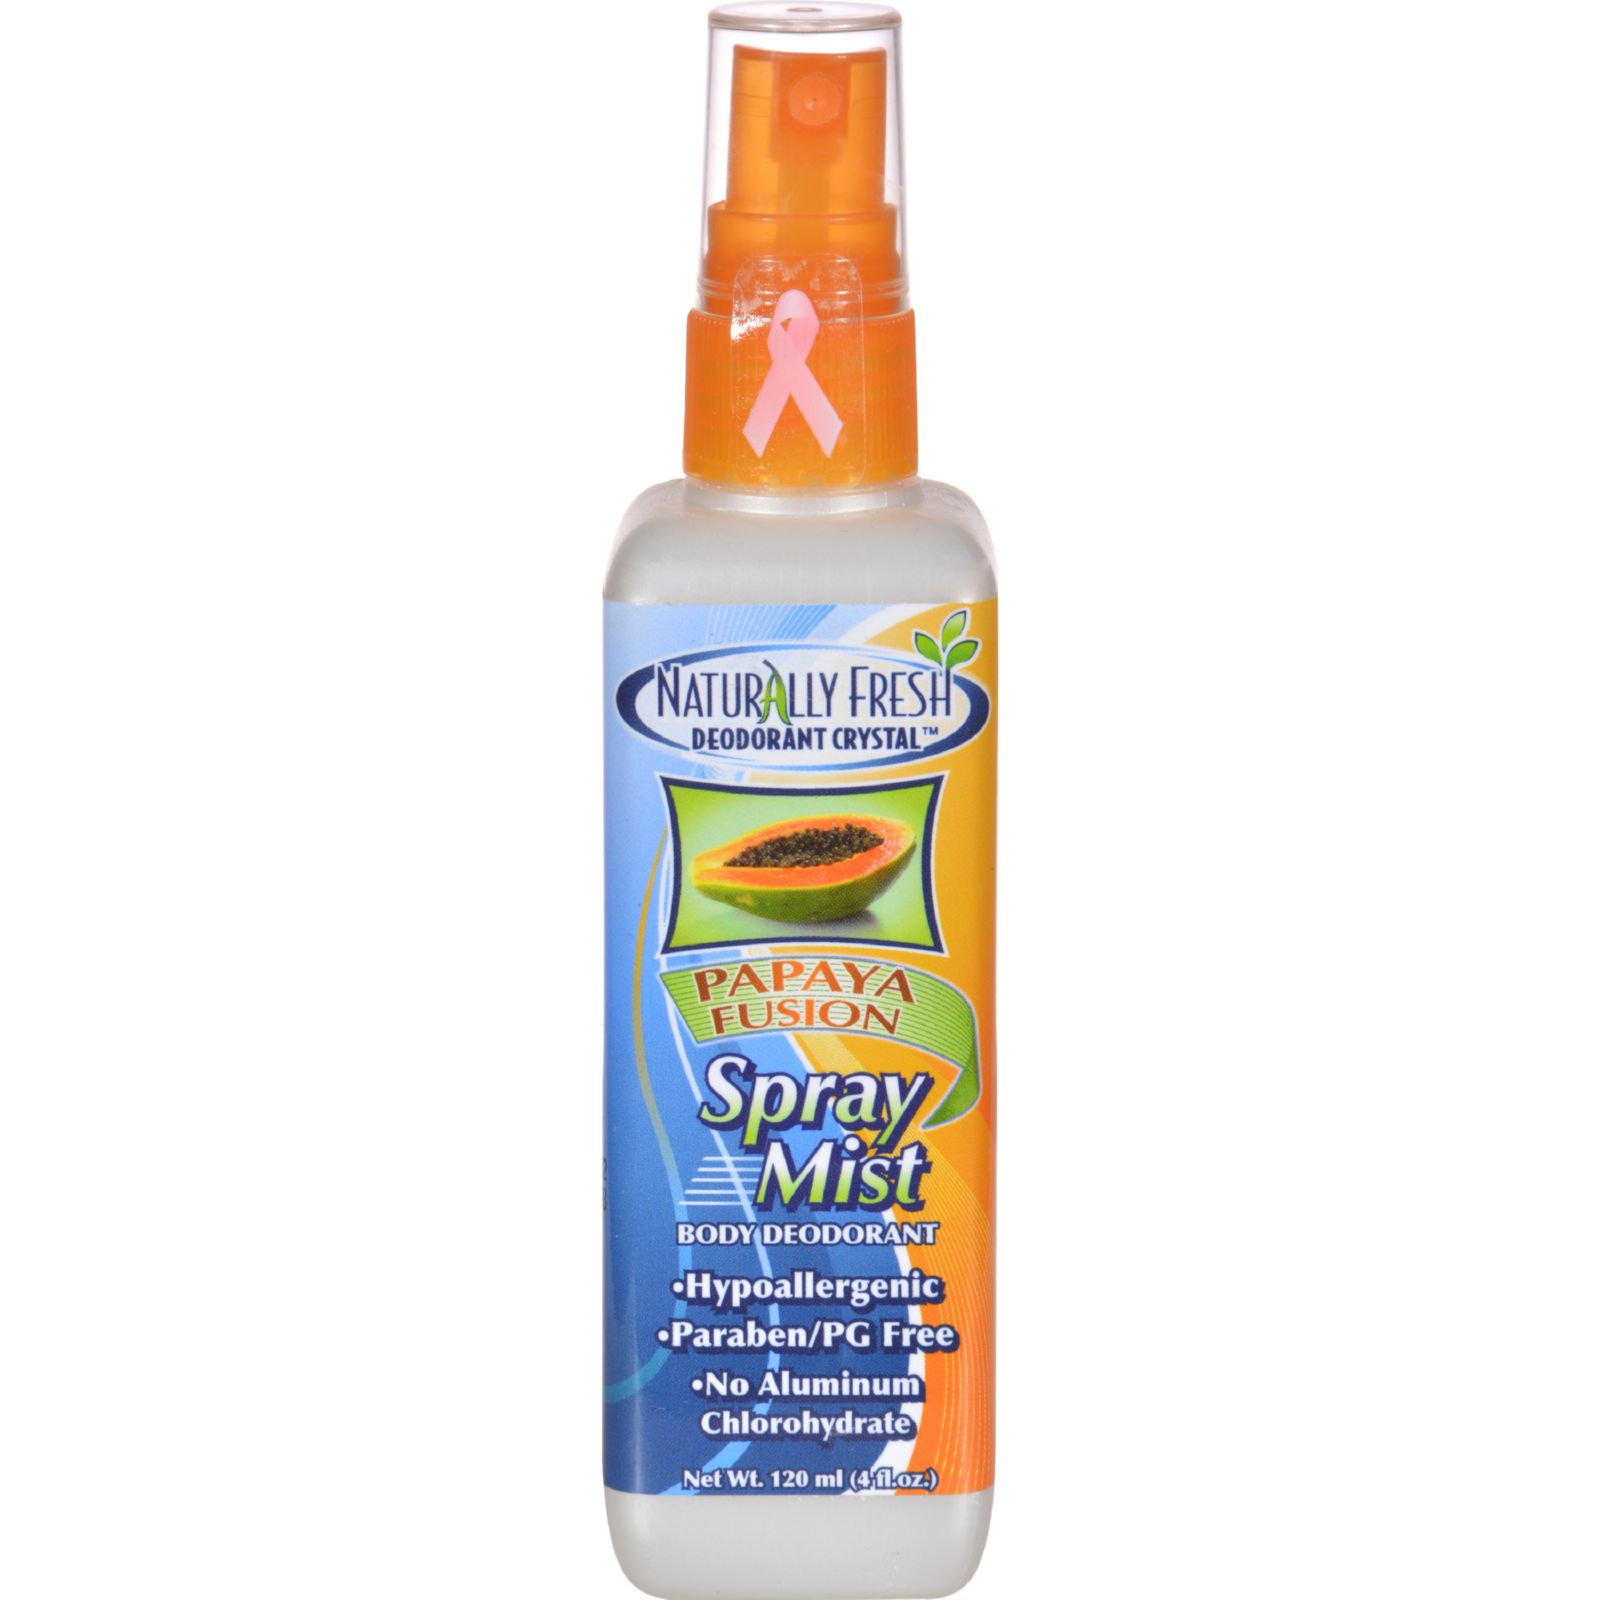 Naturally Fresh Spray Mist Body Deodorant Papaya Fusion - 4 fl oz - image 1 of 2